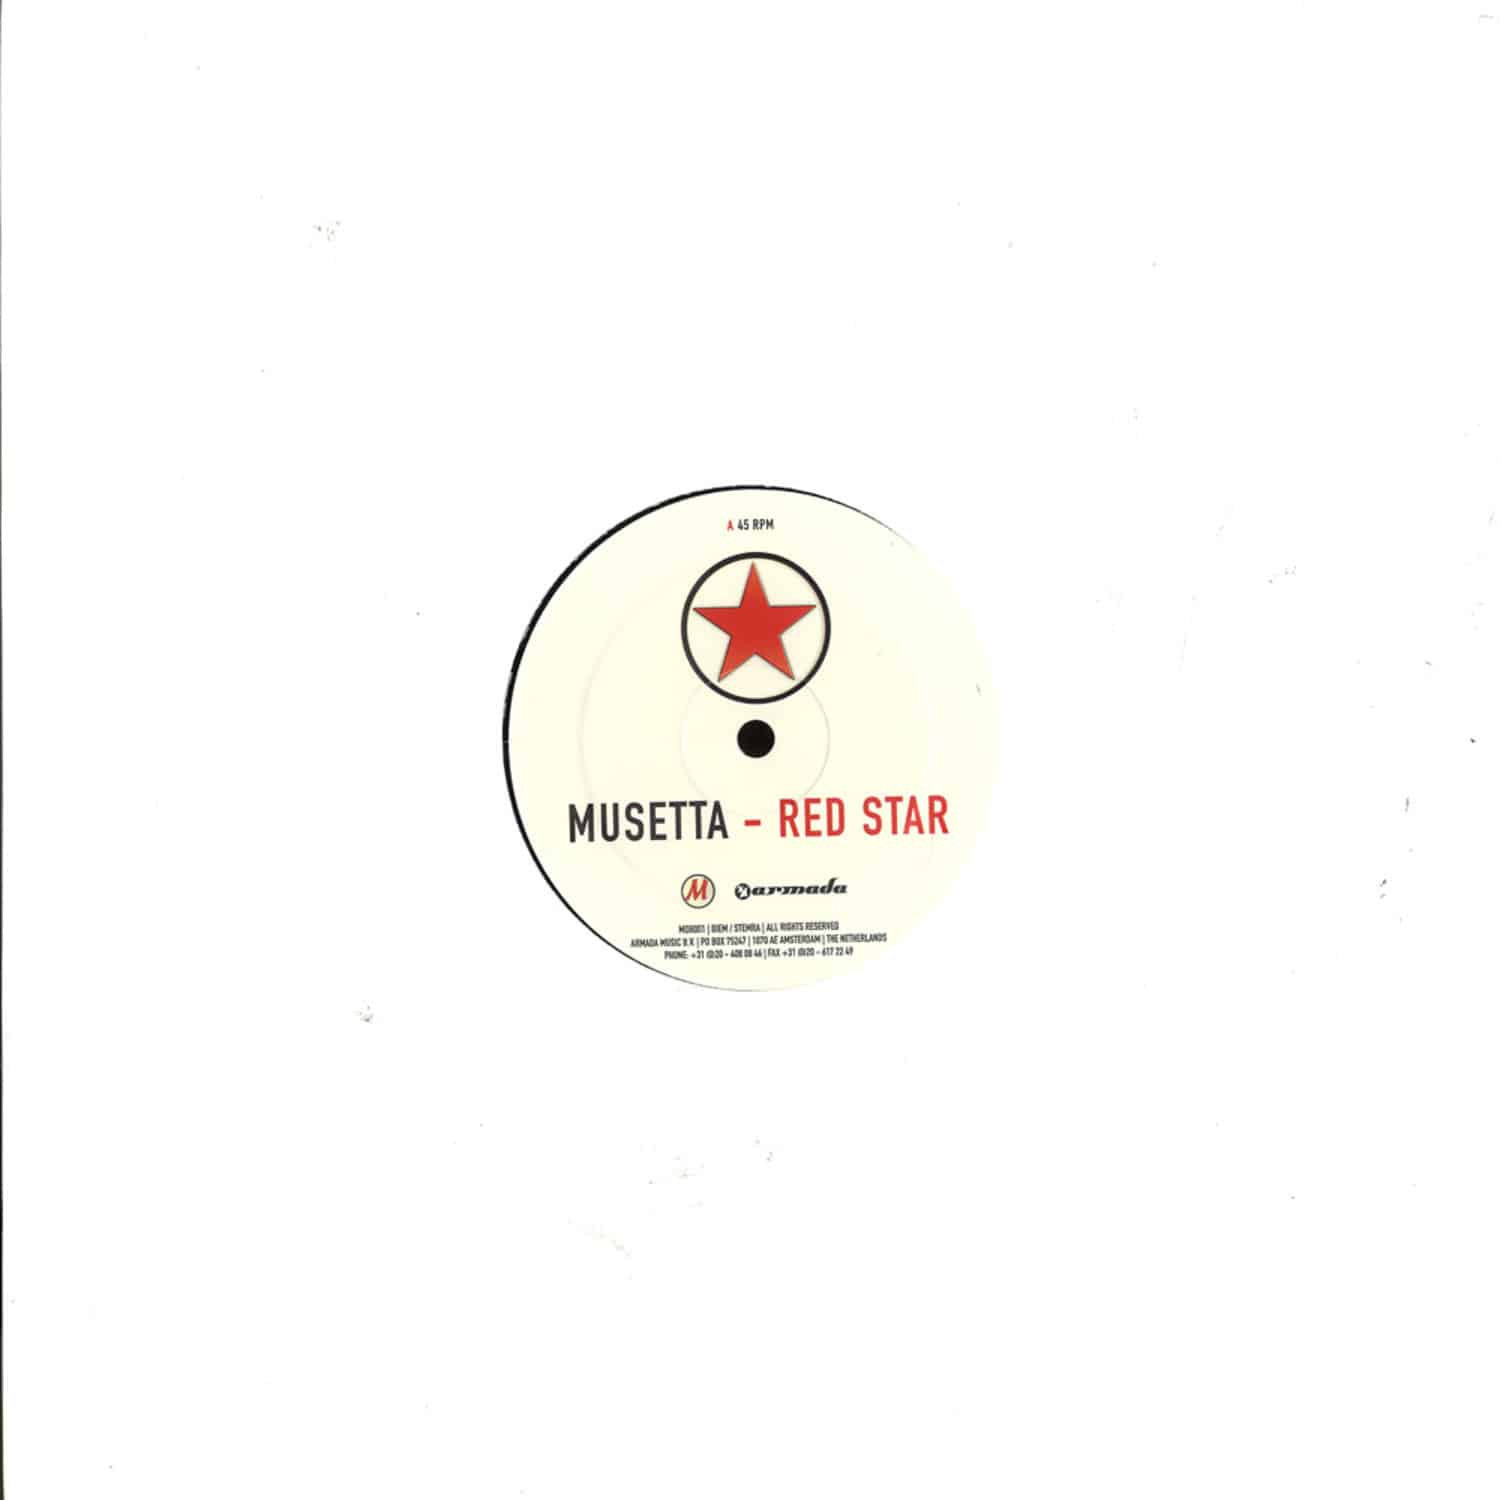 Musetta - RED STAR